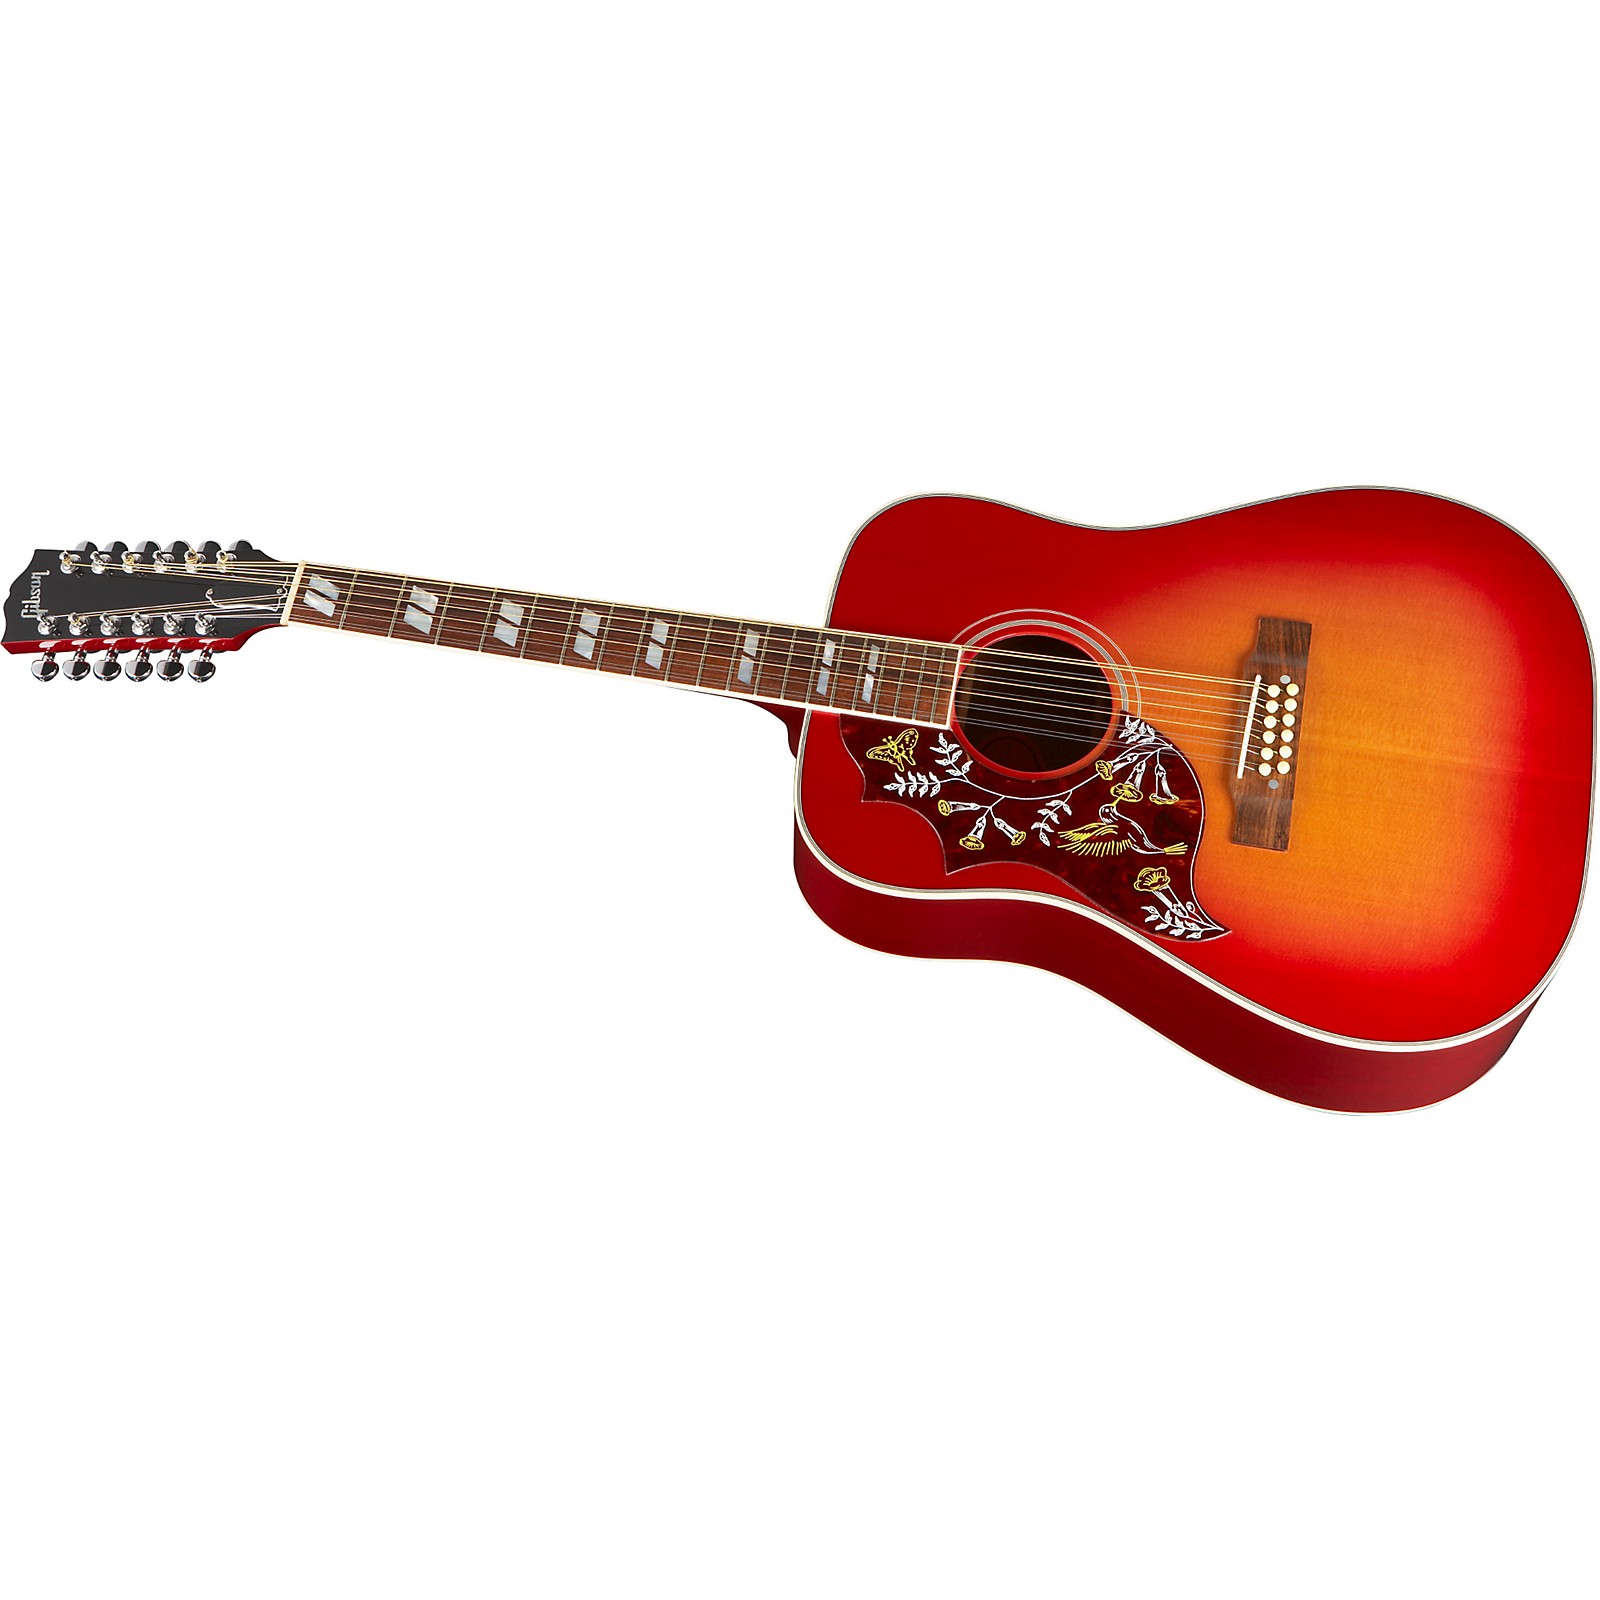 Двенадцатиструнная гитара Gibson. Gibson Hummingbird 12 String. Акустическая гитара Tyma. Зеленая акустическая гитара.